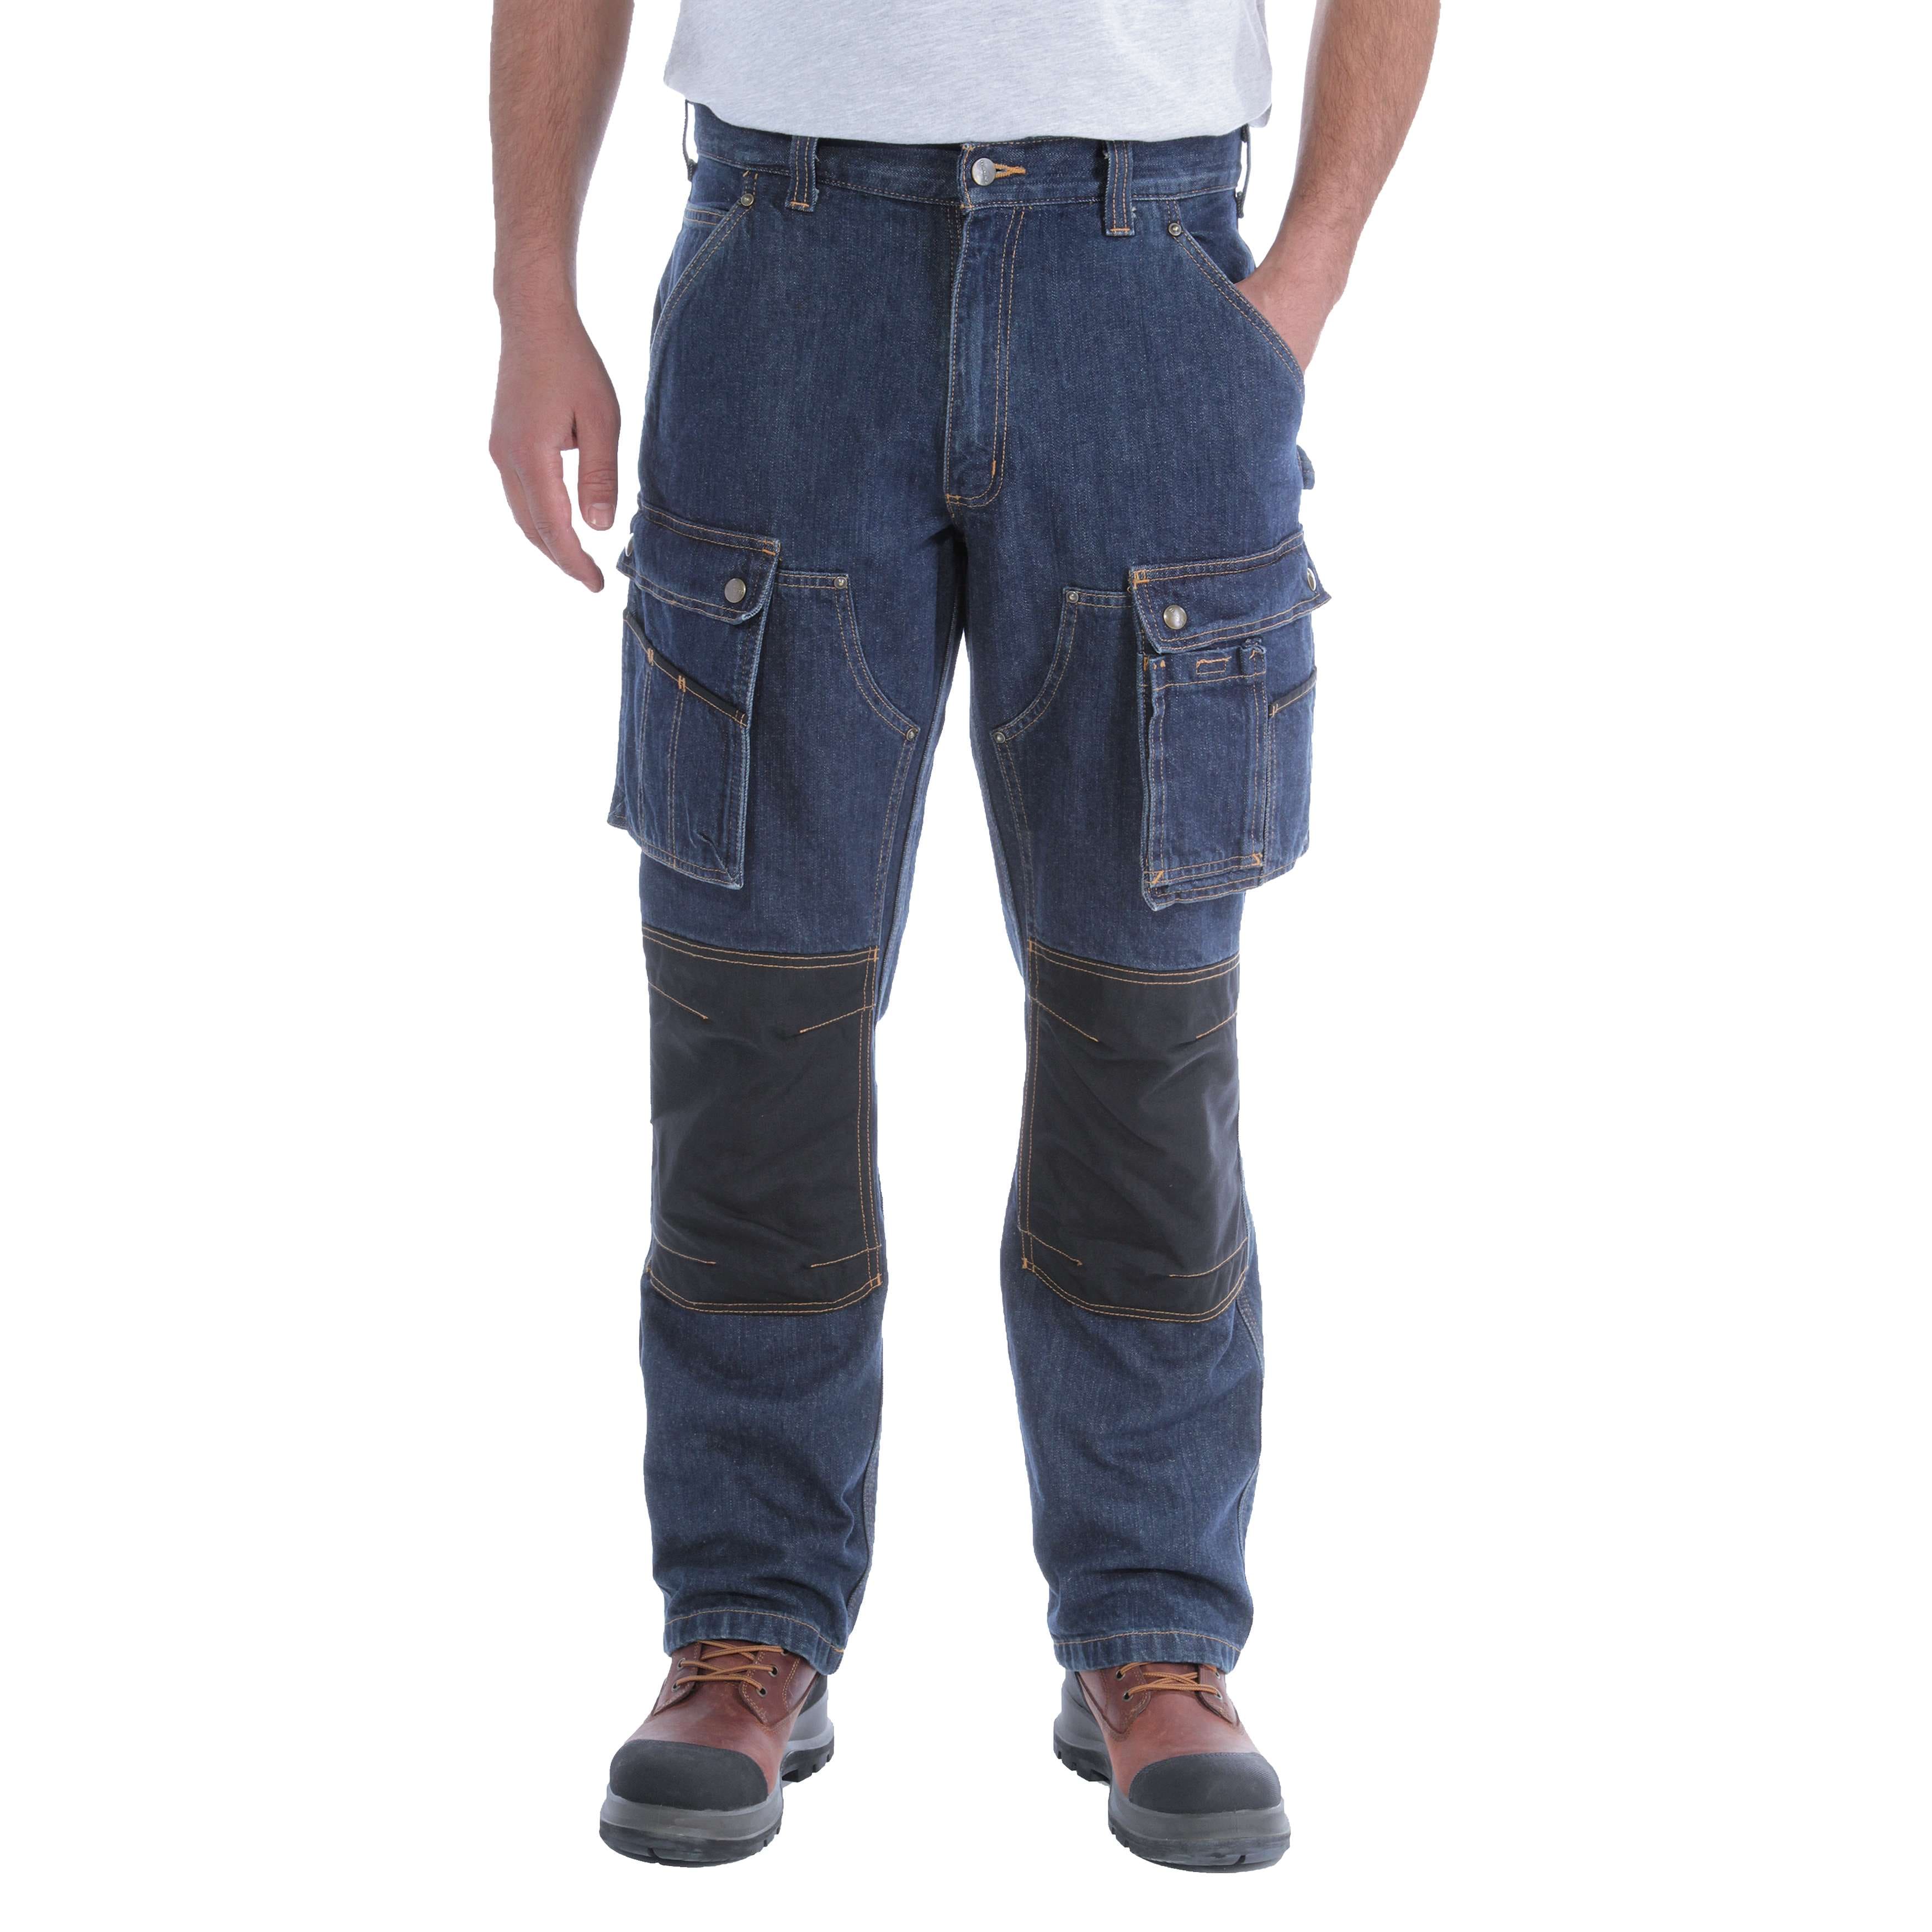 multi pocket jeans pants